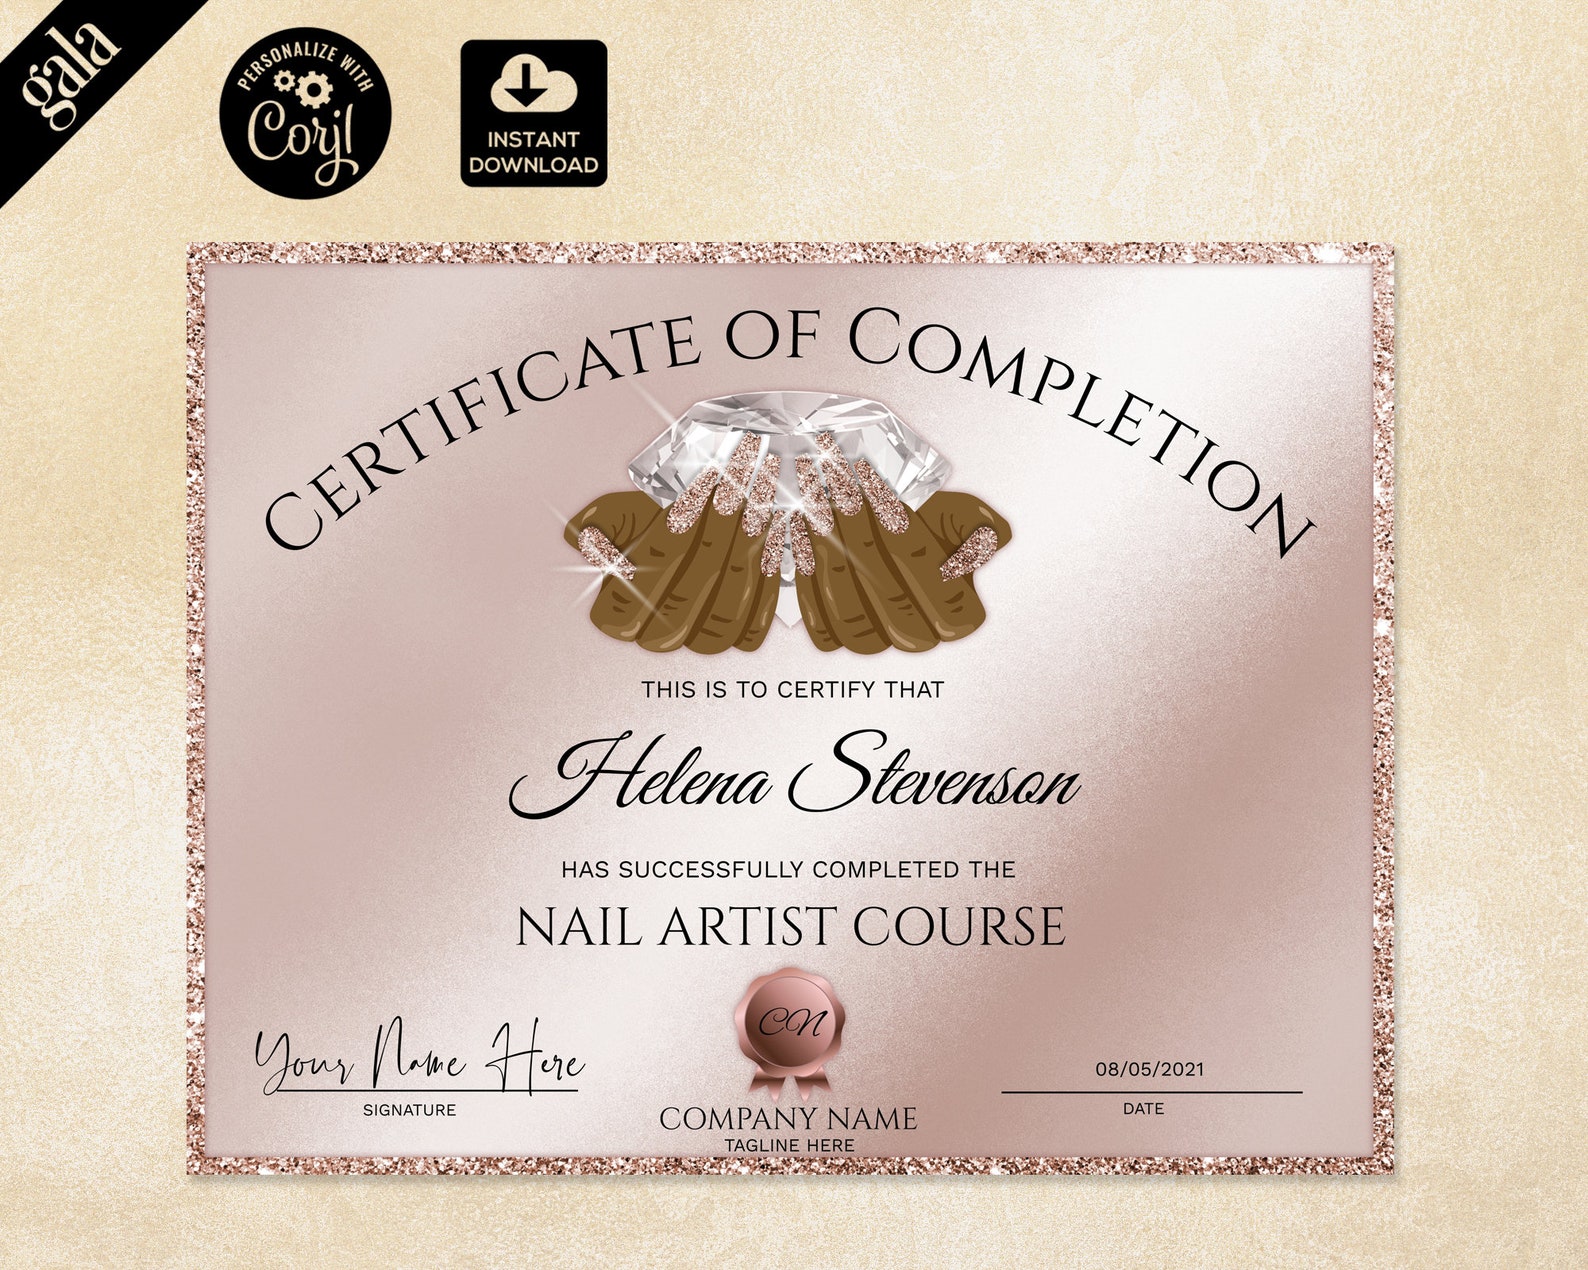 2. Nail Technician Certification - wide 8